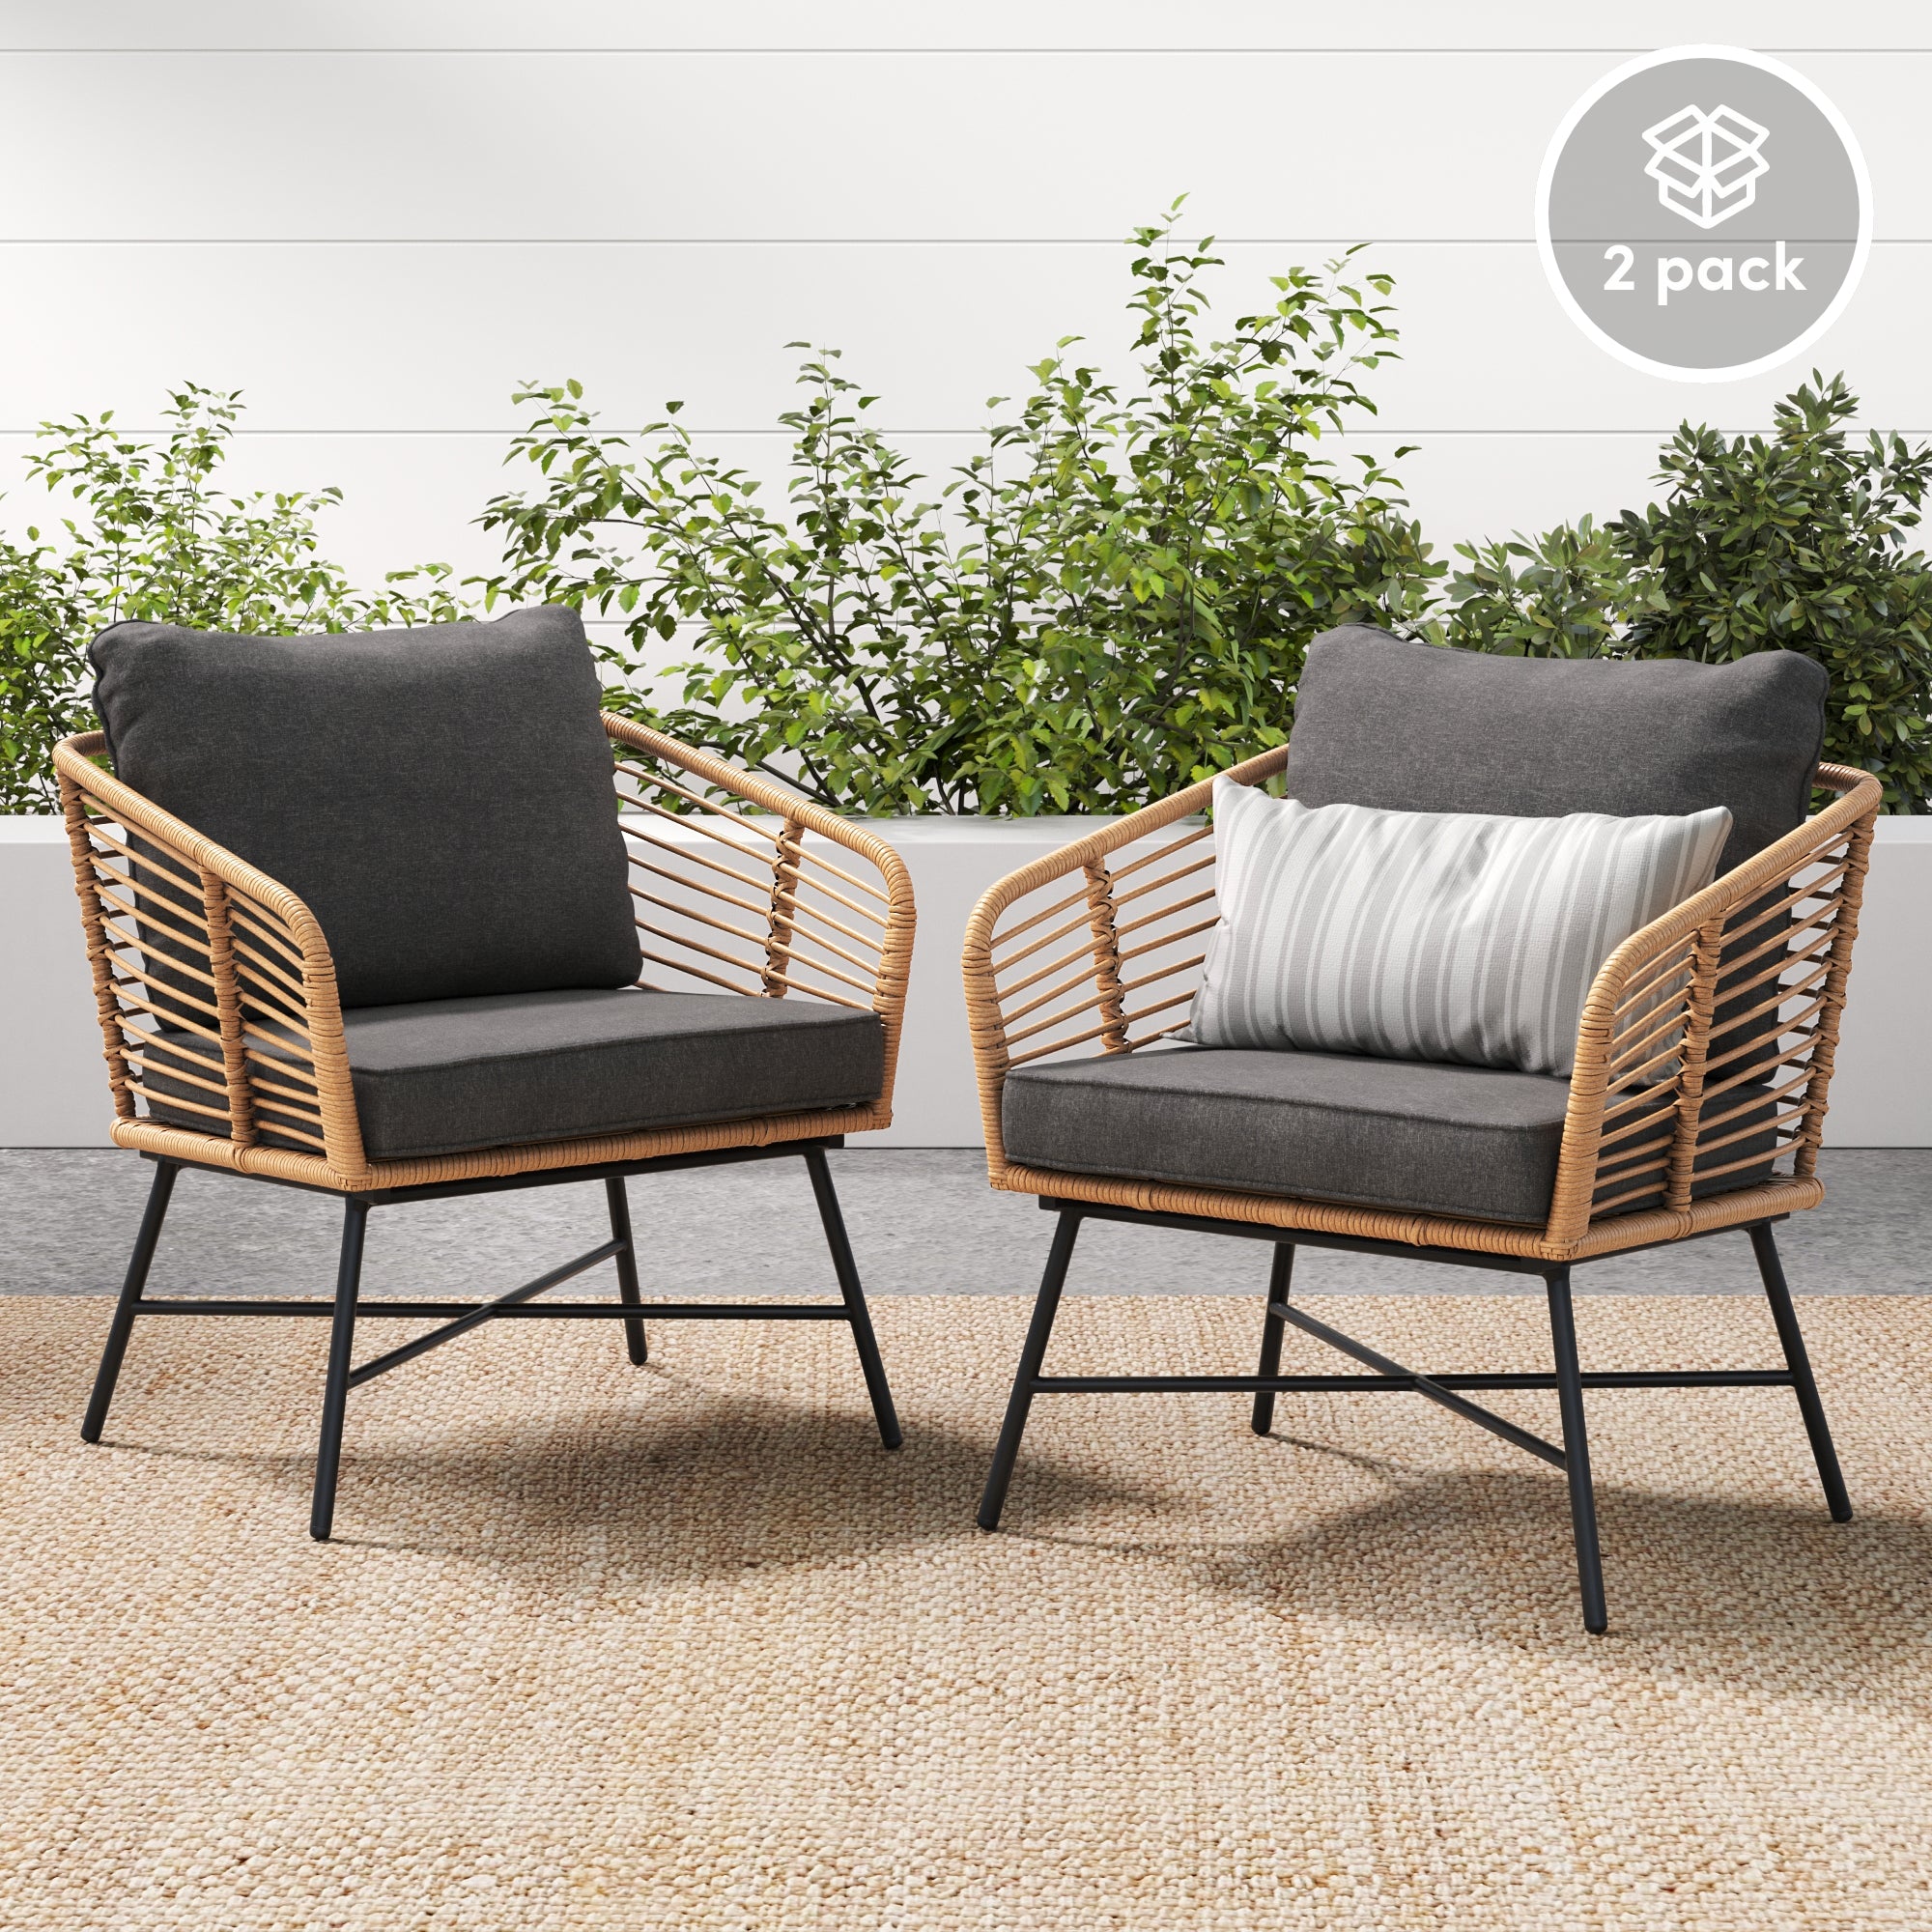 Rattan Outdoor Chairs Set of 2 | Flow